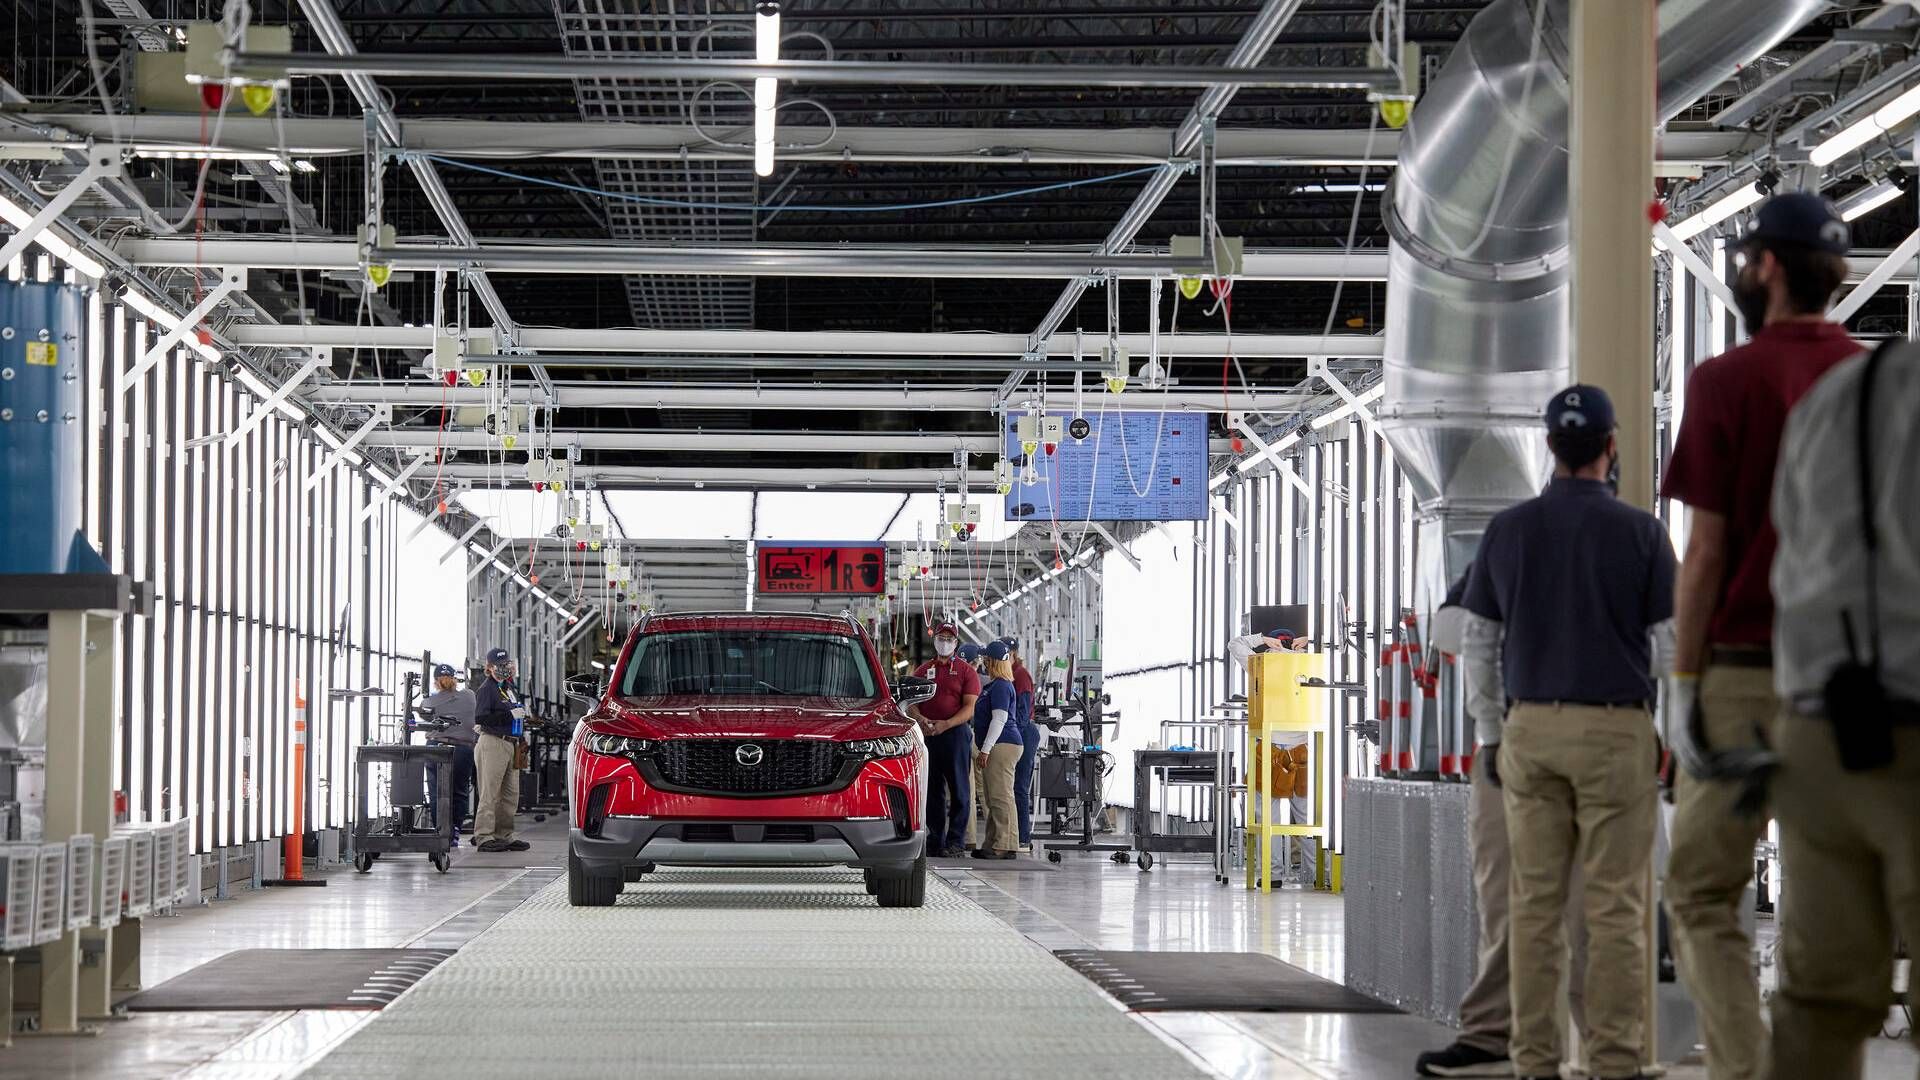 Bilproducenten Mazda vil med aftalen skabe en bedre brugeroplevelse. | Foto: Jon Morgan/AP/Ritzau Scanpix